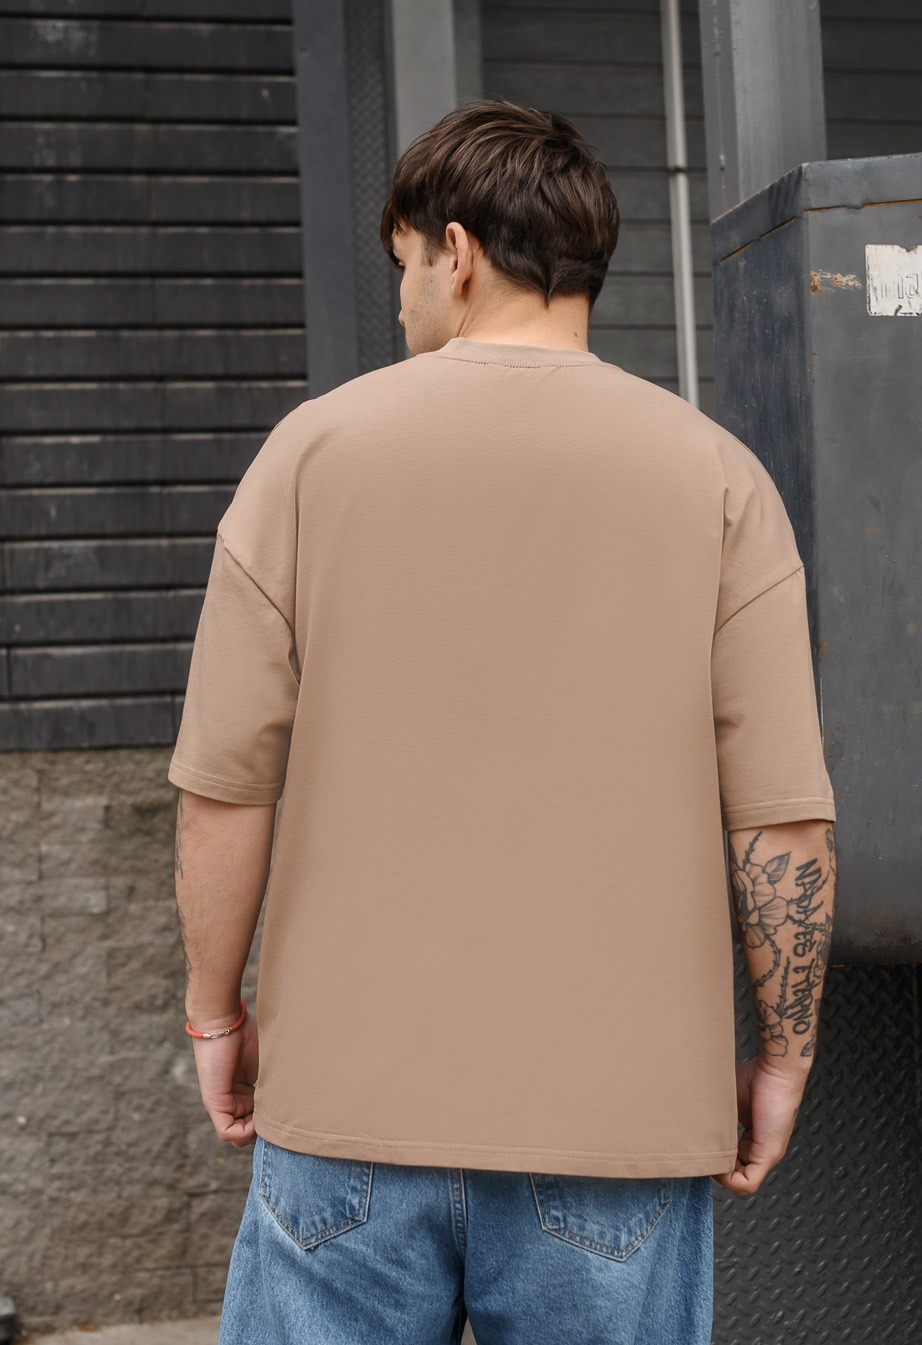 Koszulka Staff brown basic oversize